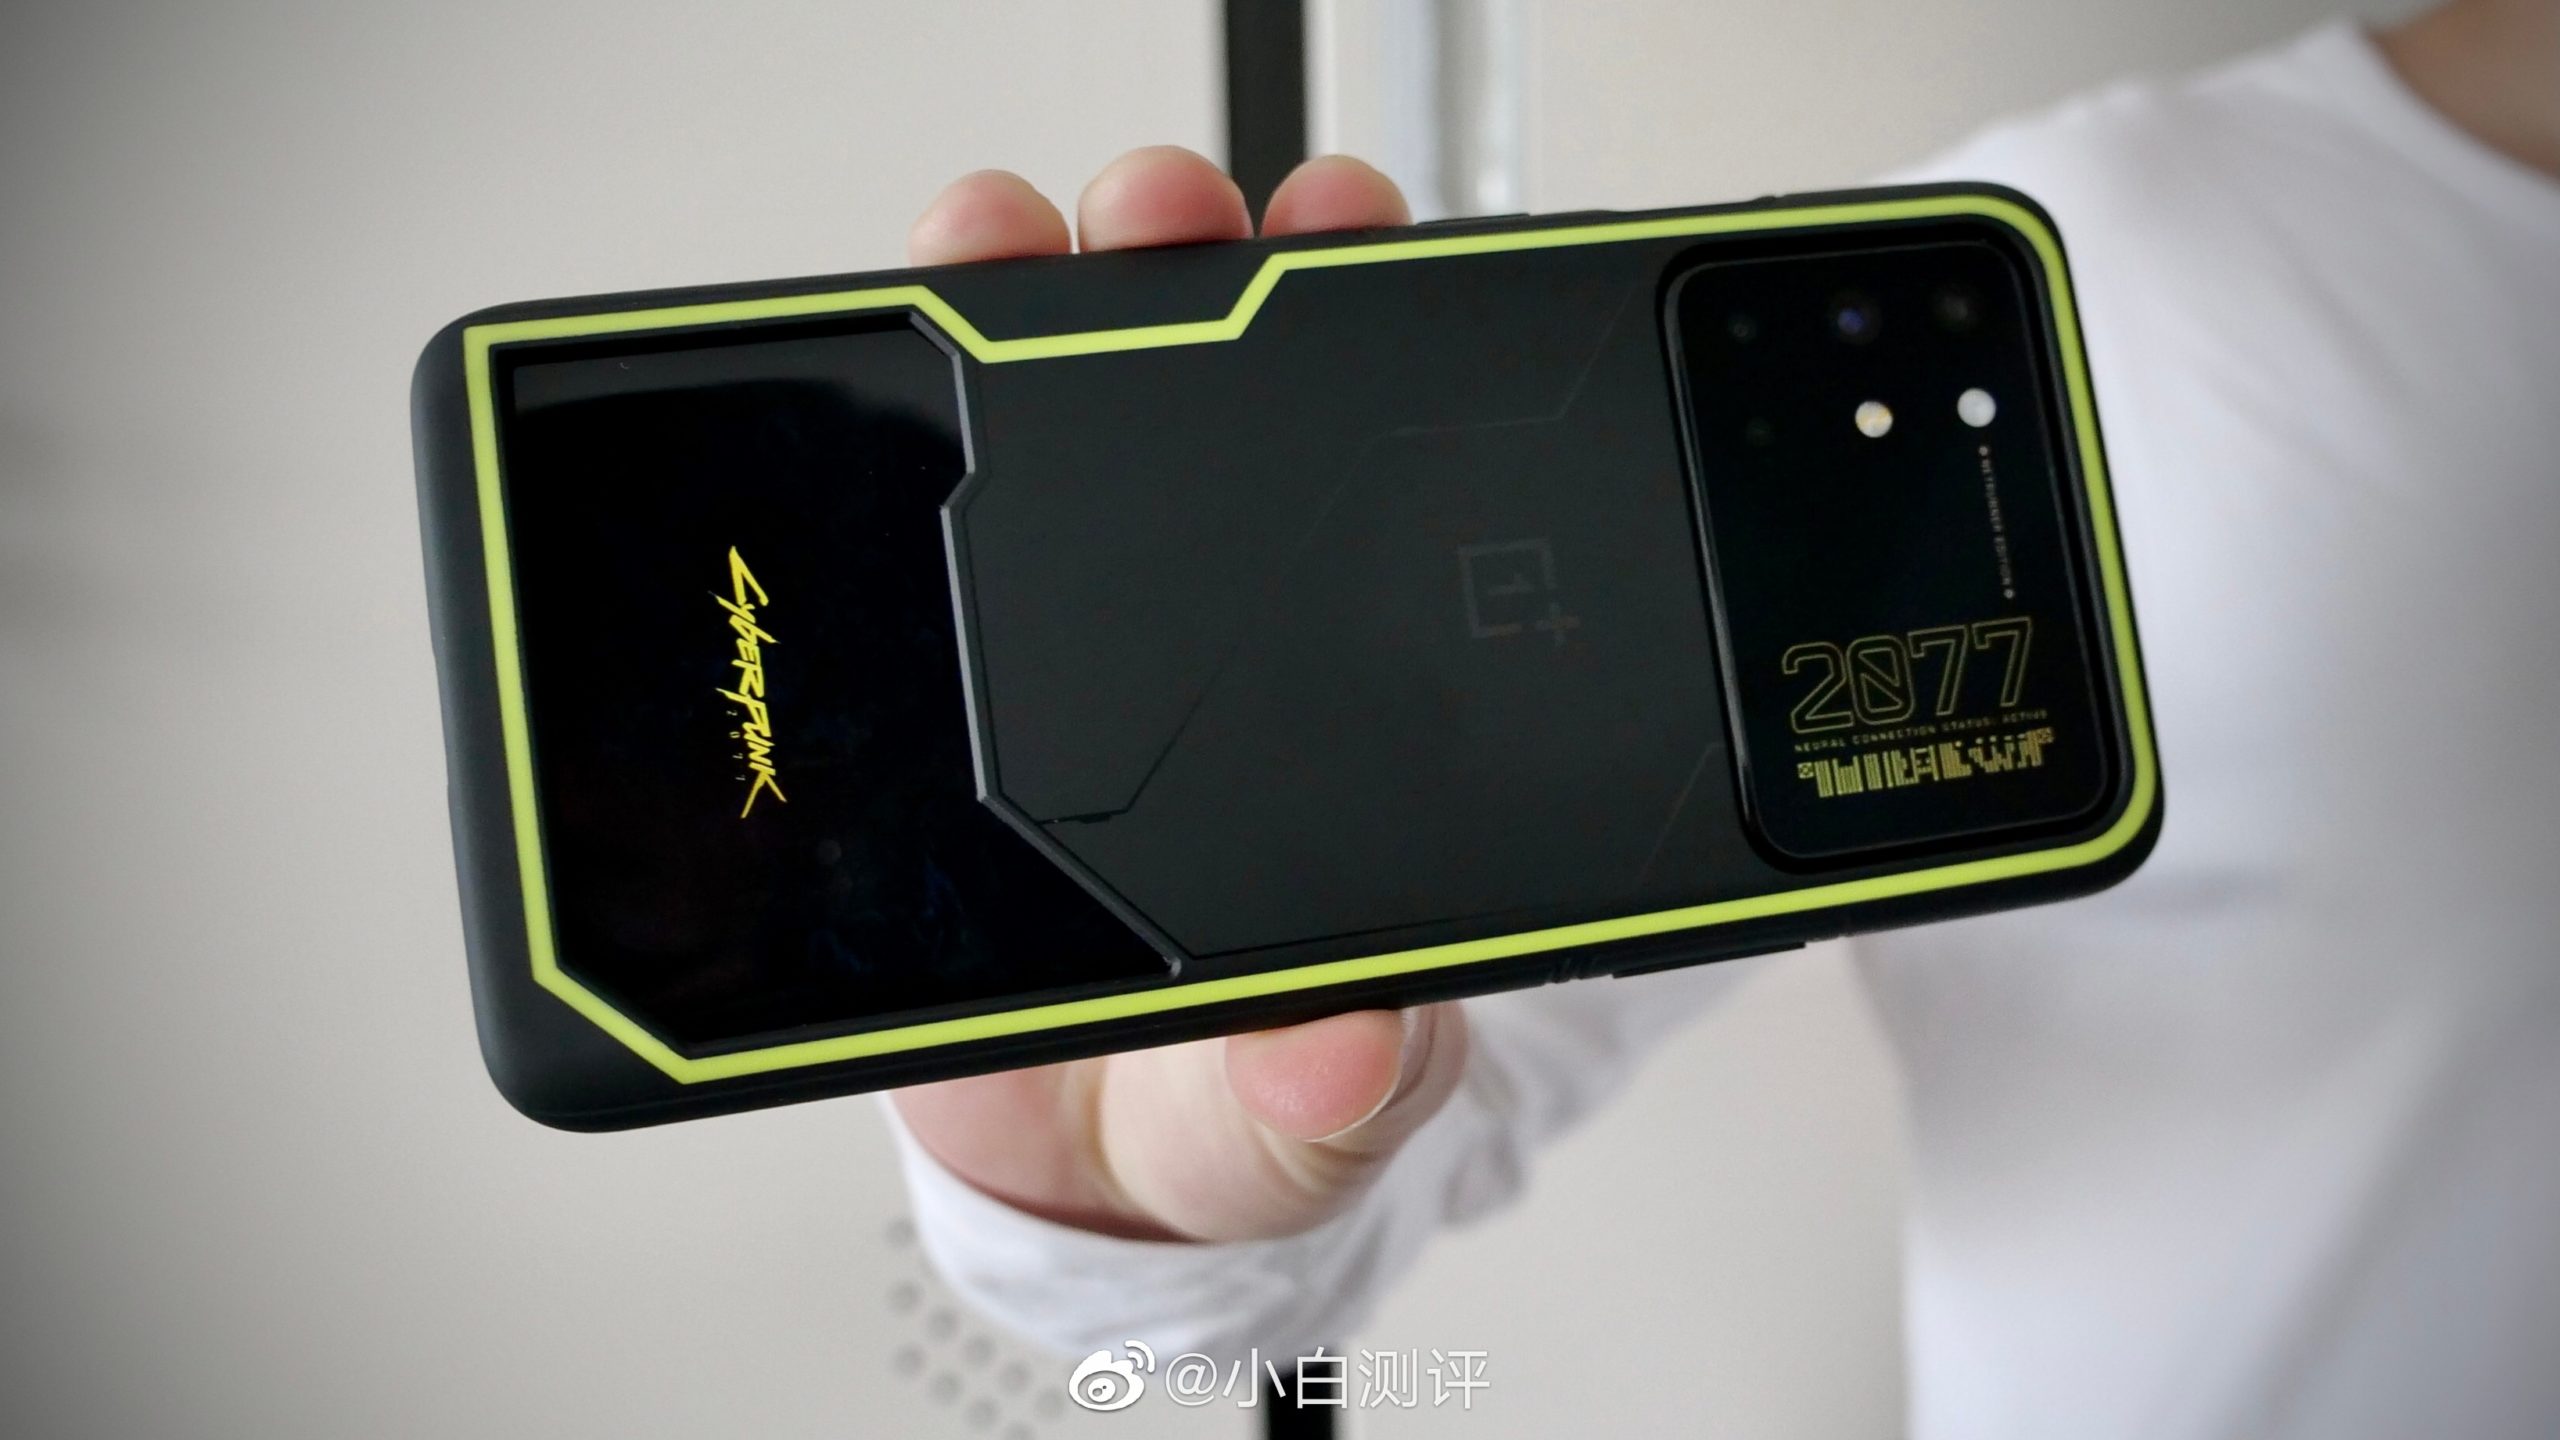 OnePlus 8T в стиле Cyberpunk 2077